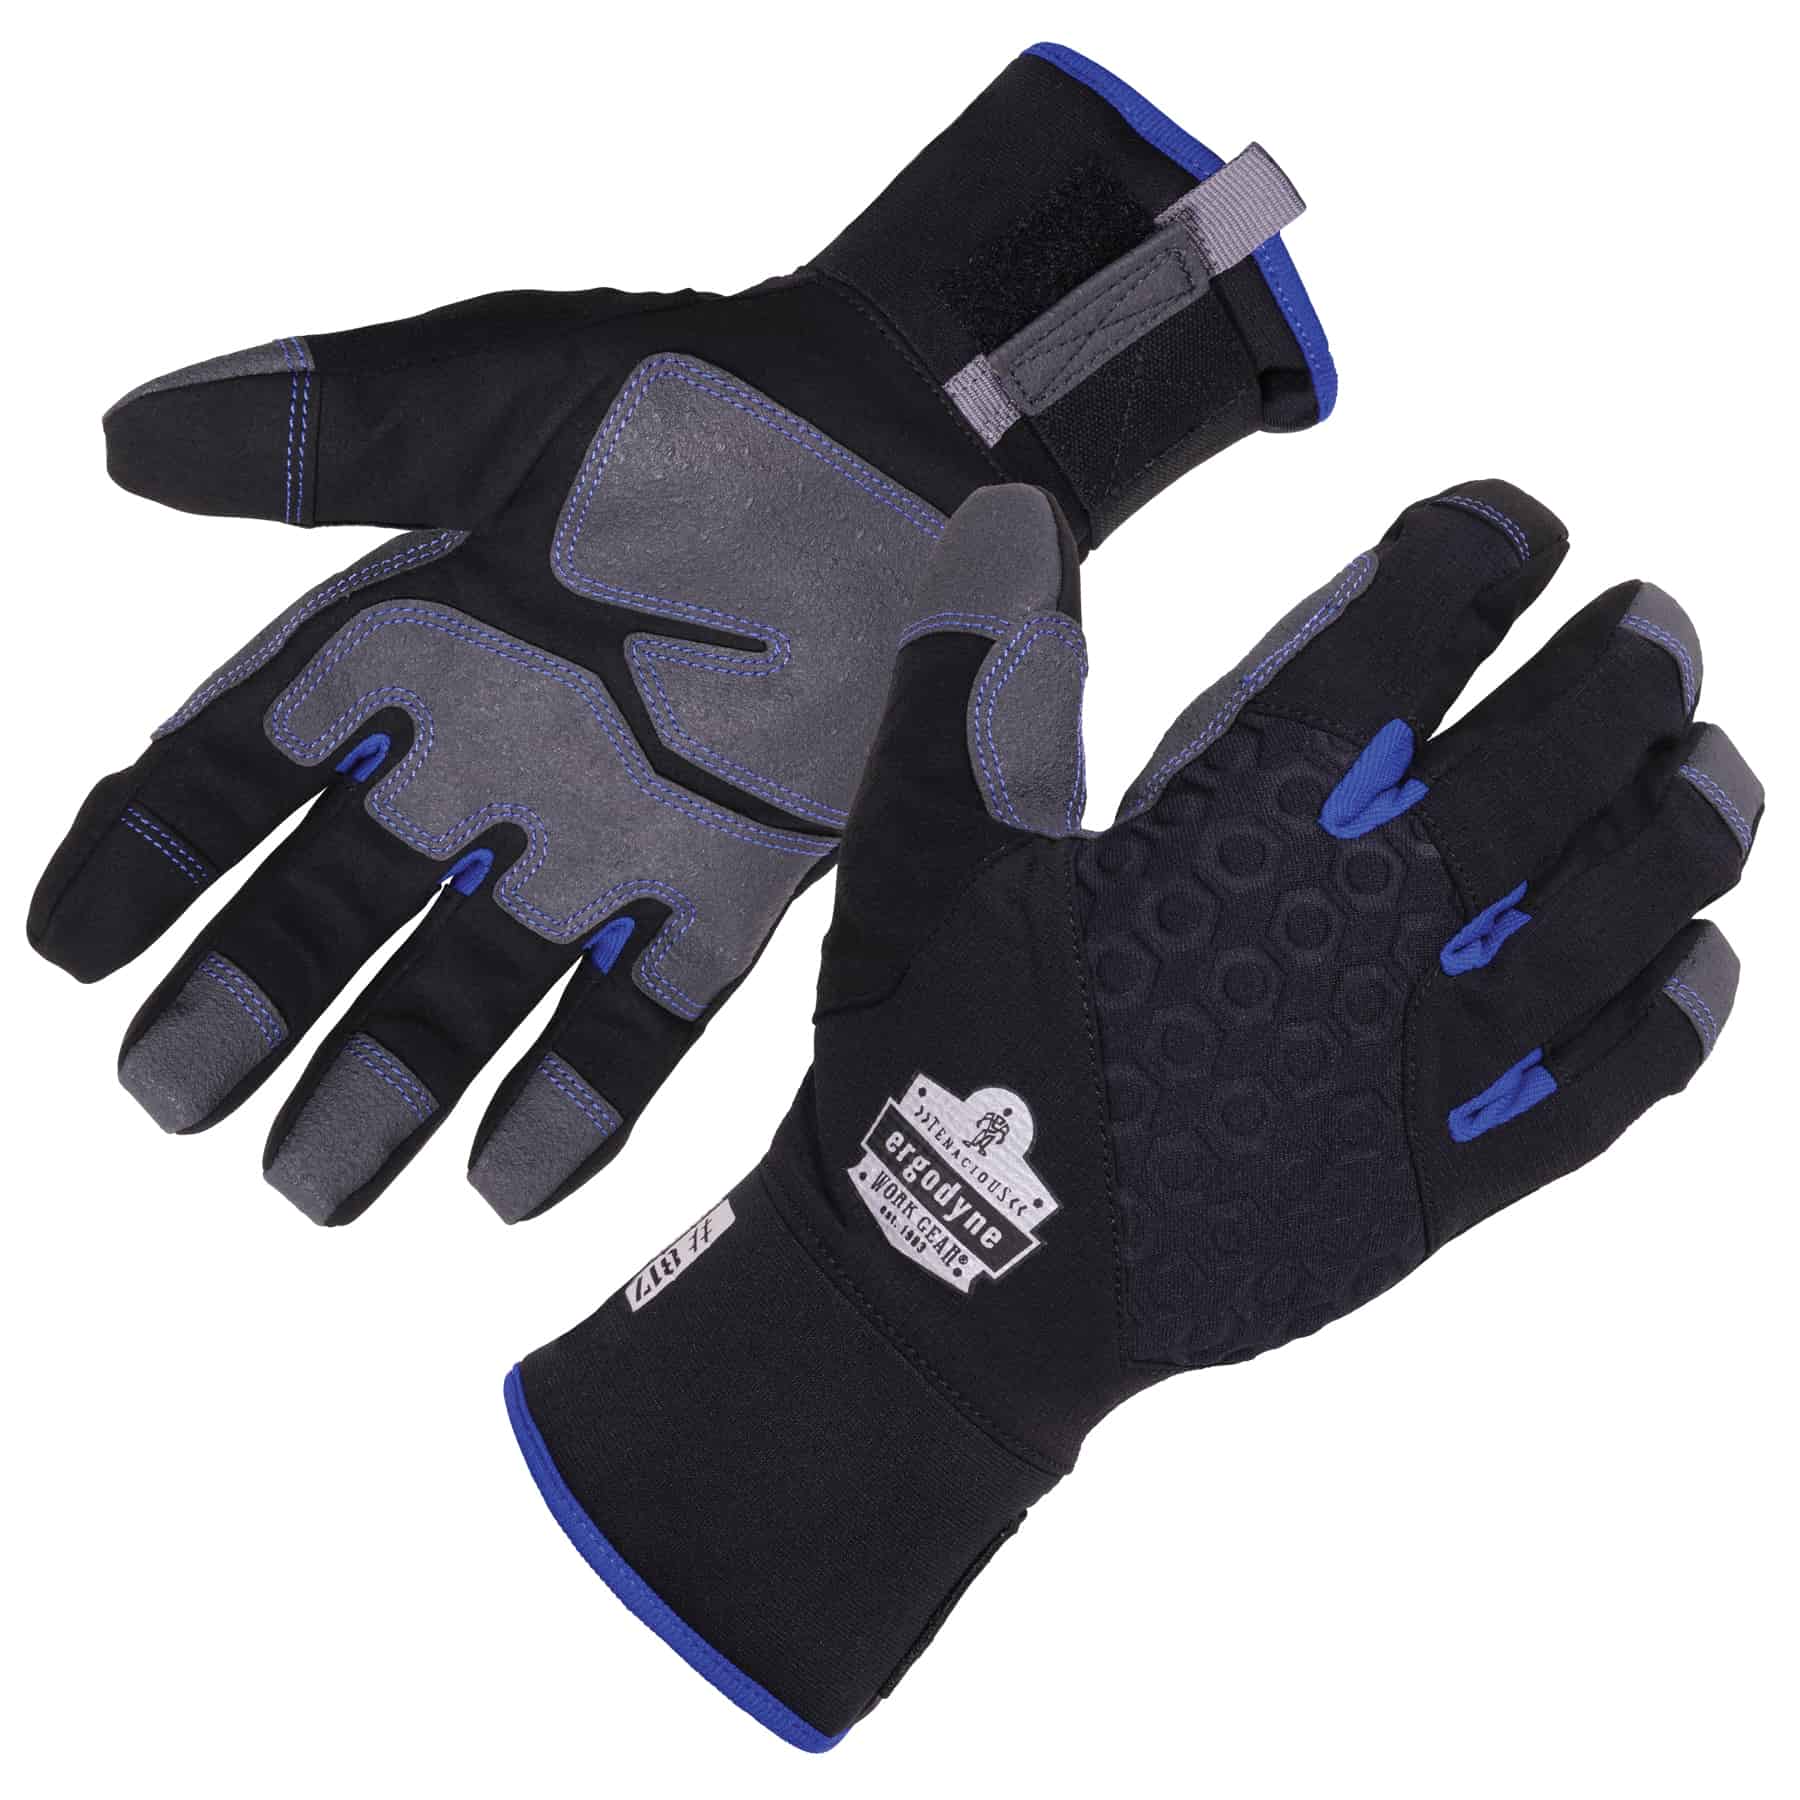 https://www.ergodyne.com/sites/default/files/product-images/817-thermal-winter-work-gloves-black-pair.jpg